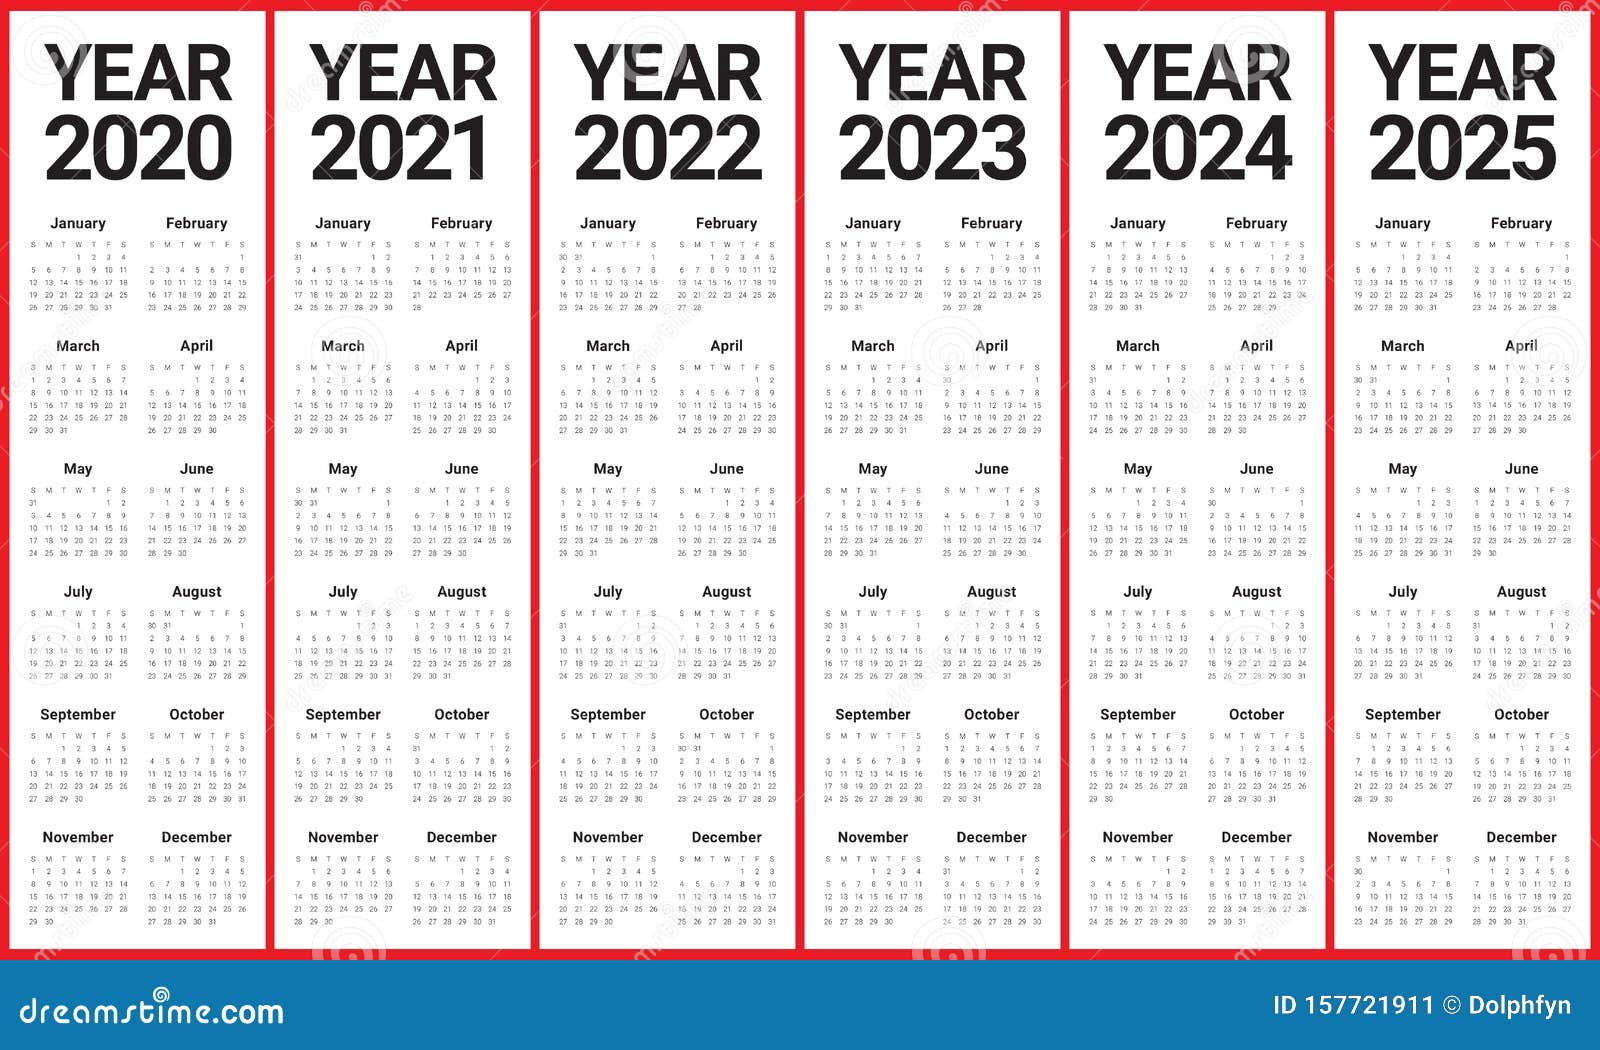 5 Year Calendar 2021 To 2025 Lunar Calendar